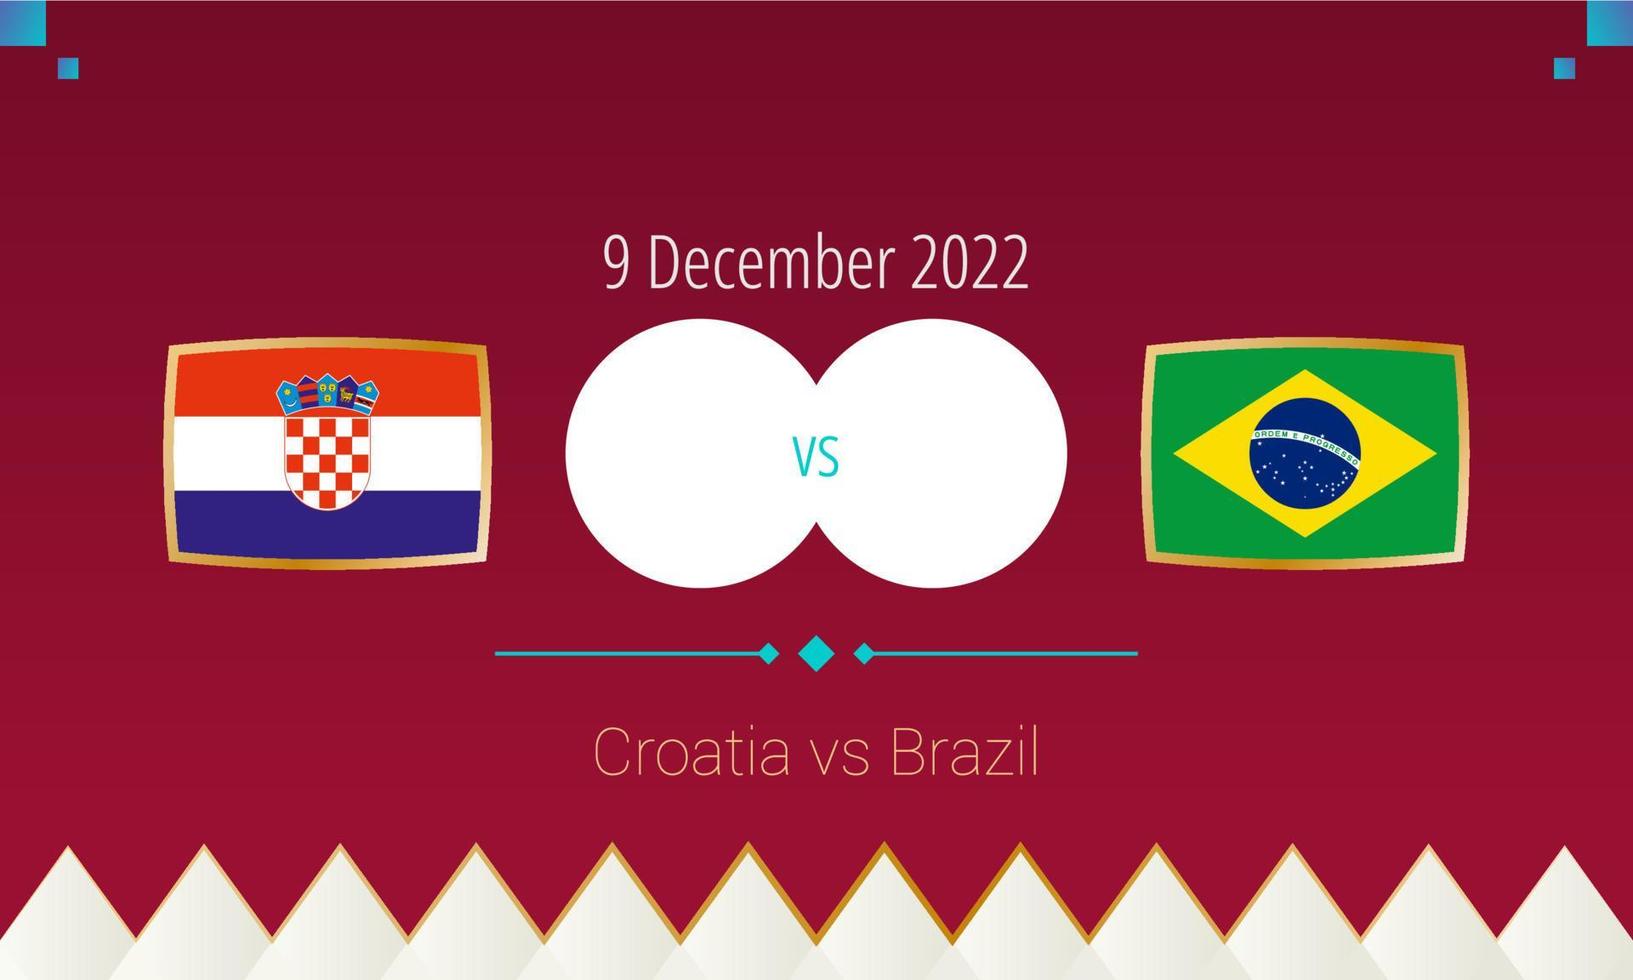 Croatia vs Brazil football match in Quarter finals, international soccer competition 2022. vector